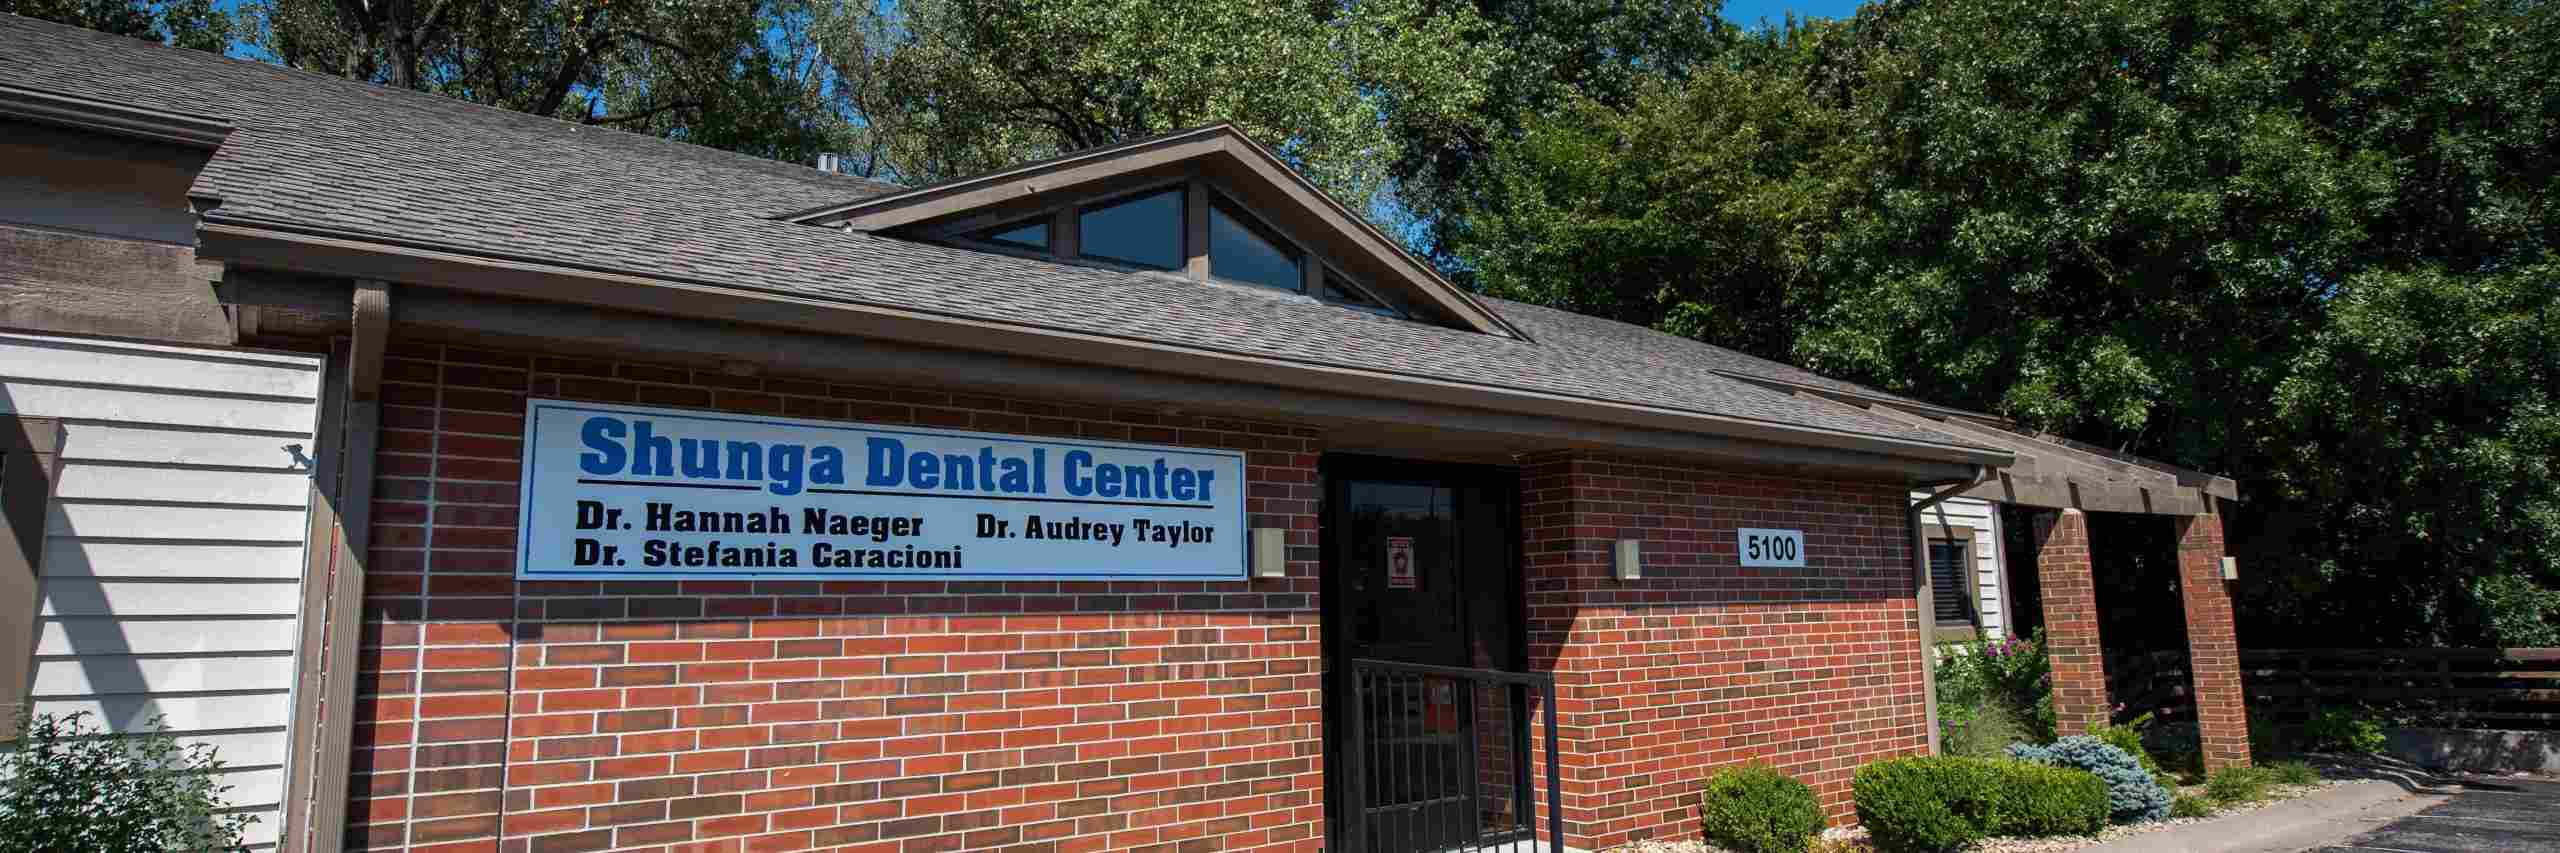 Shunga Family Dental Care Clinic in Topeka, KS